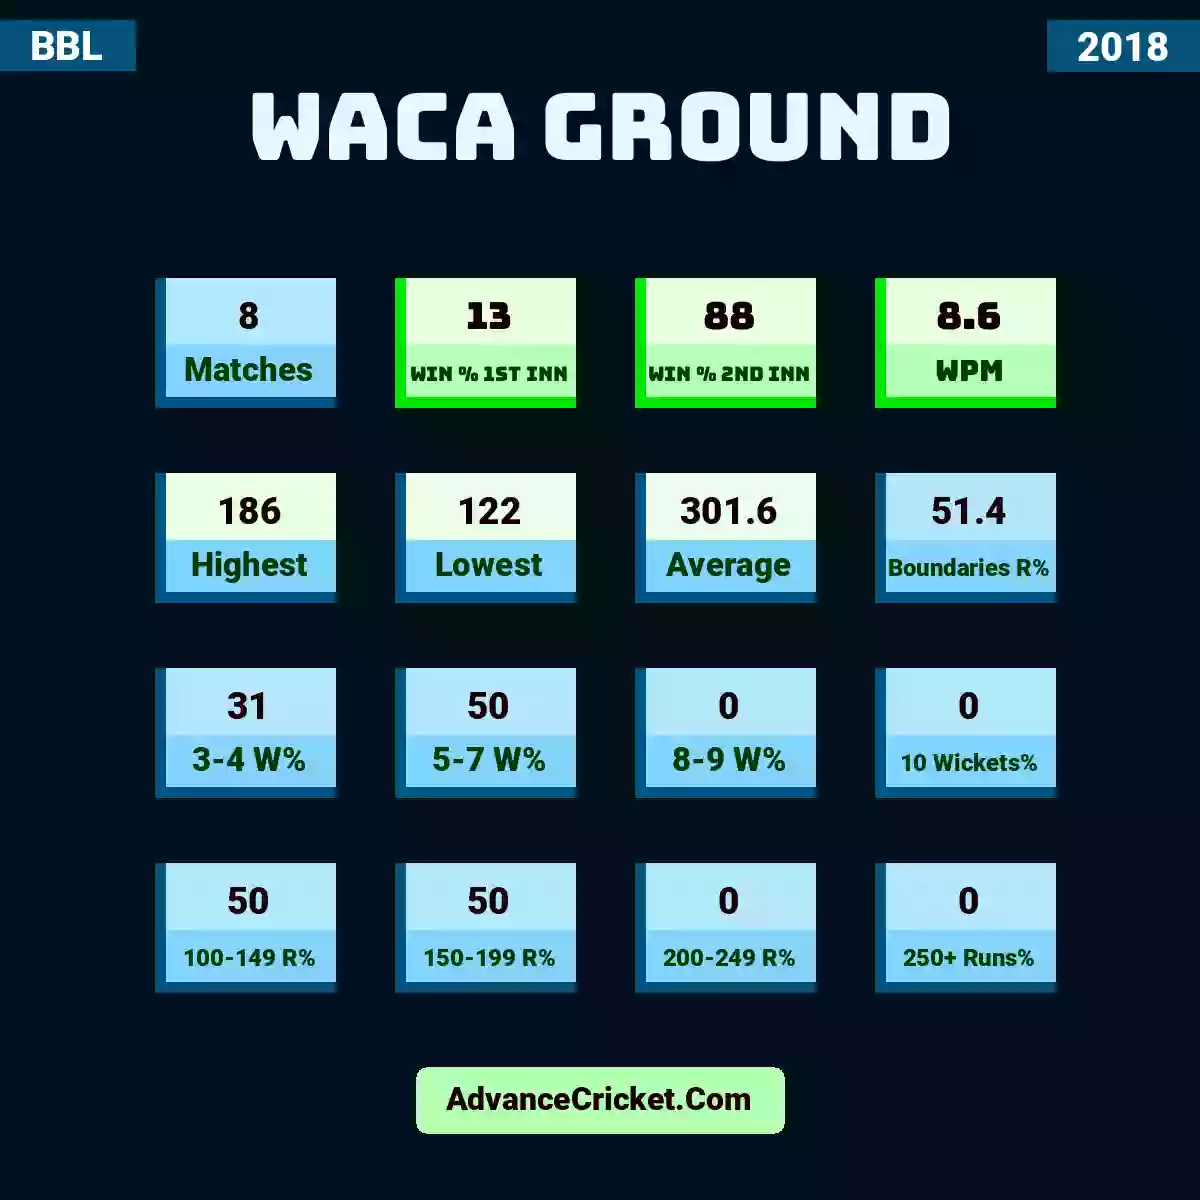 Image showing WACA Ground with Matches: 8, Win % 1st Inn: 13, Win % 2nd Inn: 88, WPM: 8.6, Highest: 186, Lowest: 122, Average: 301.6, Boundaries R%: 51.4, 3-4 W%: 31, 5-7 W%: 50, 8-9 W%: 0, 10 Wickets%: 0, 100-149 R%: 50, 150-199 R%: 50, 200-249 R%: 0, 250+ Runs%: 0.